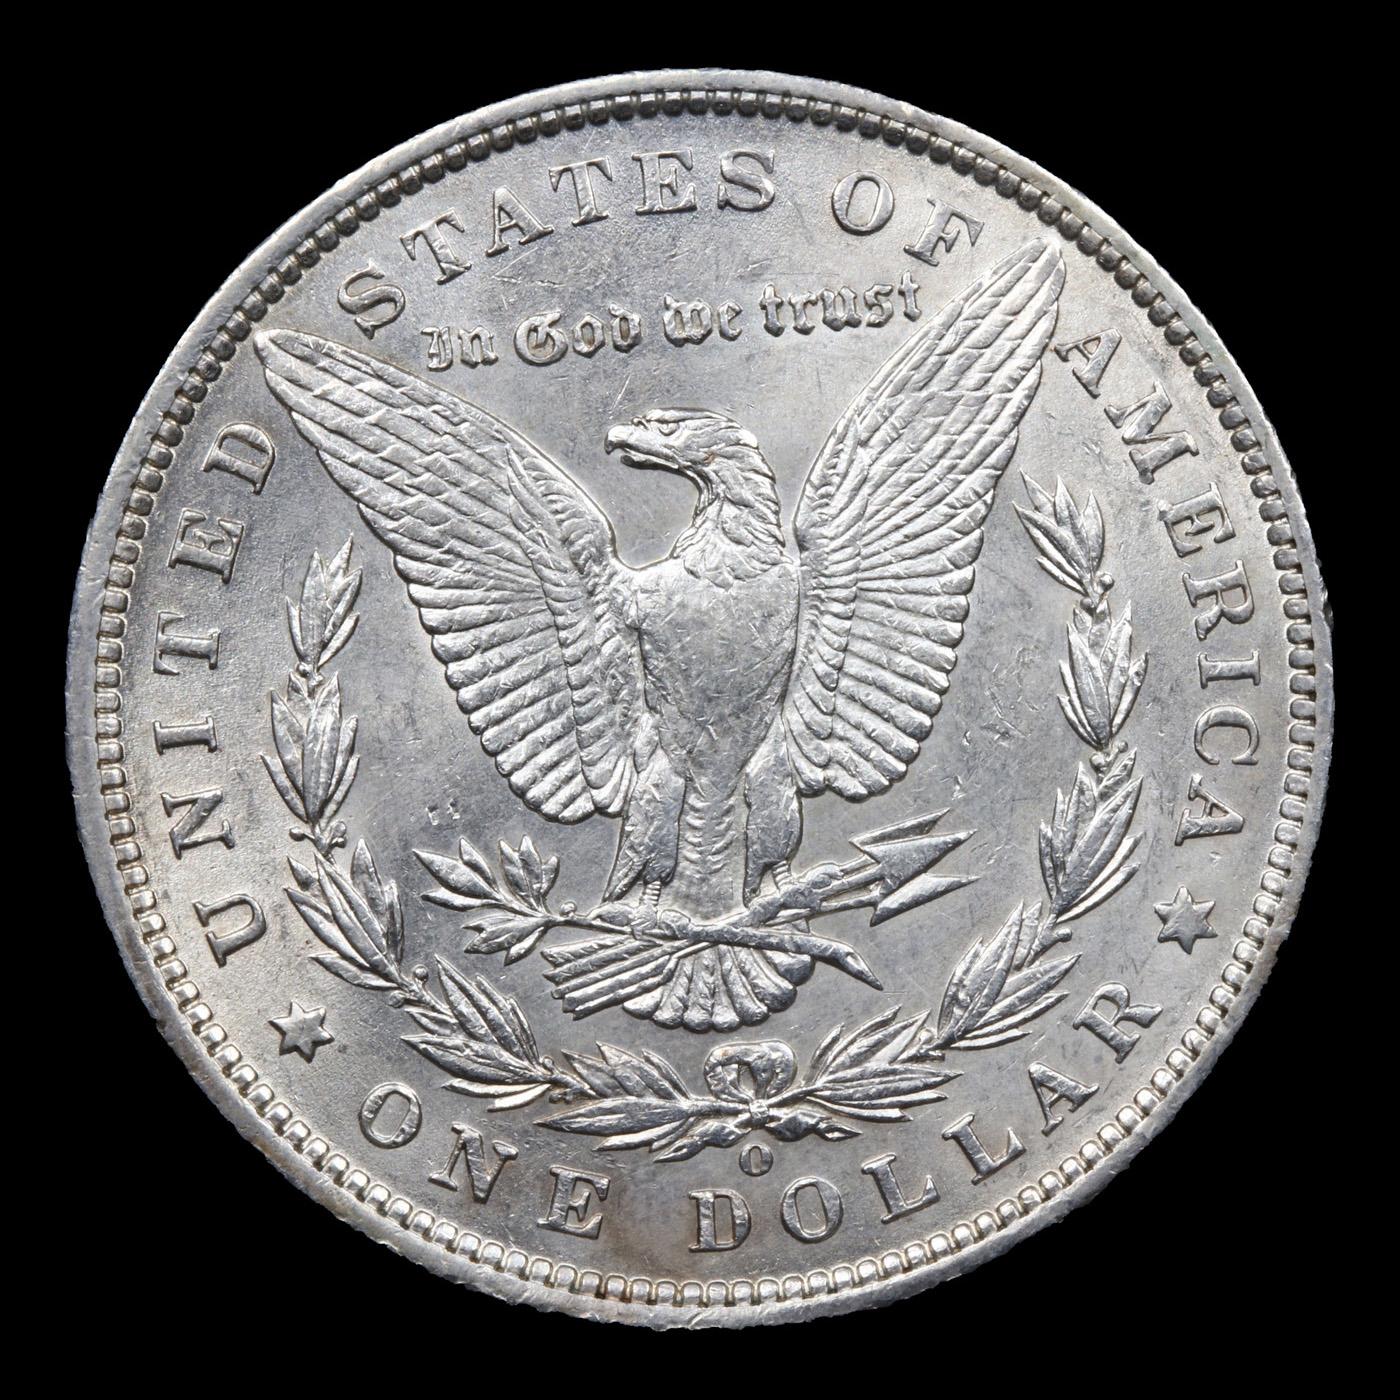 1890-o Morgan Dollar $1 Grades Select Unc